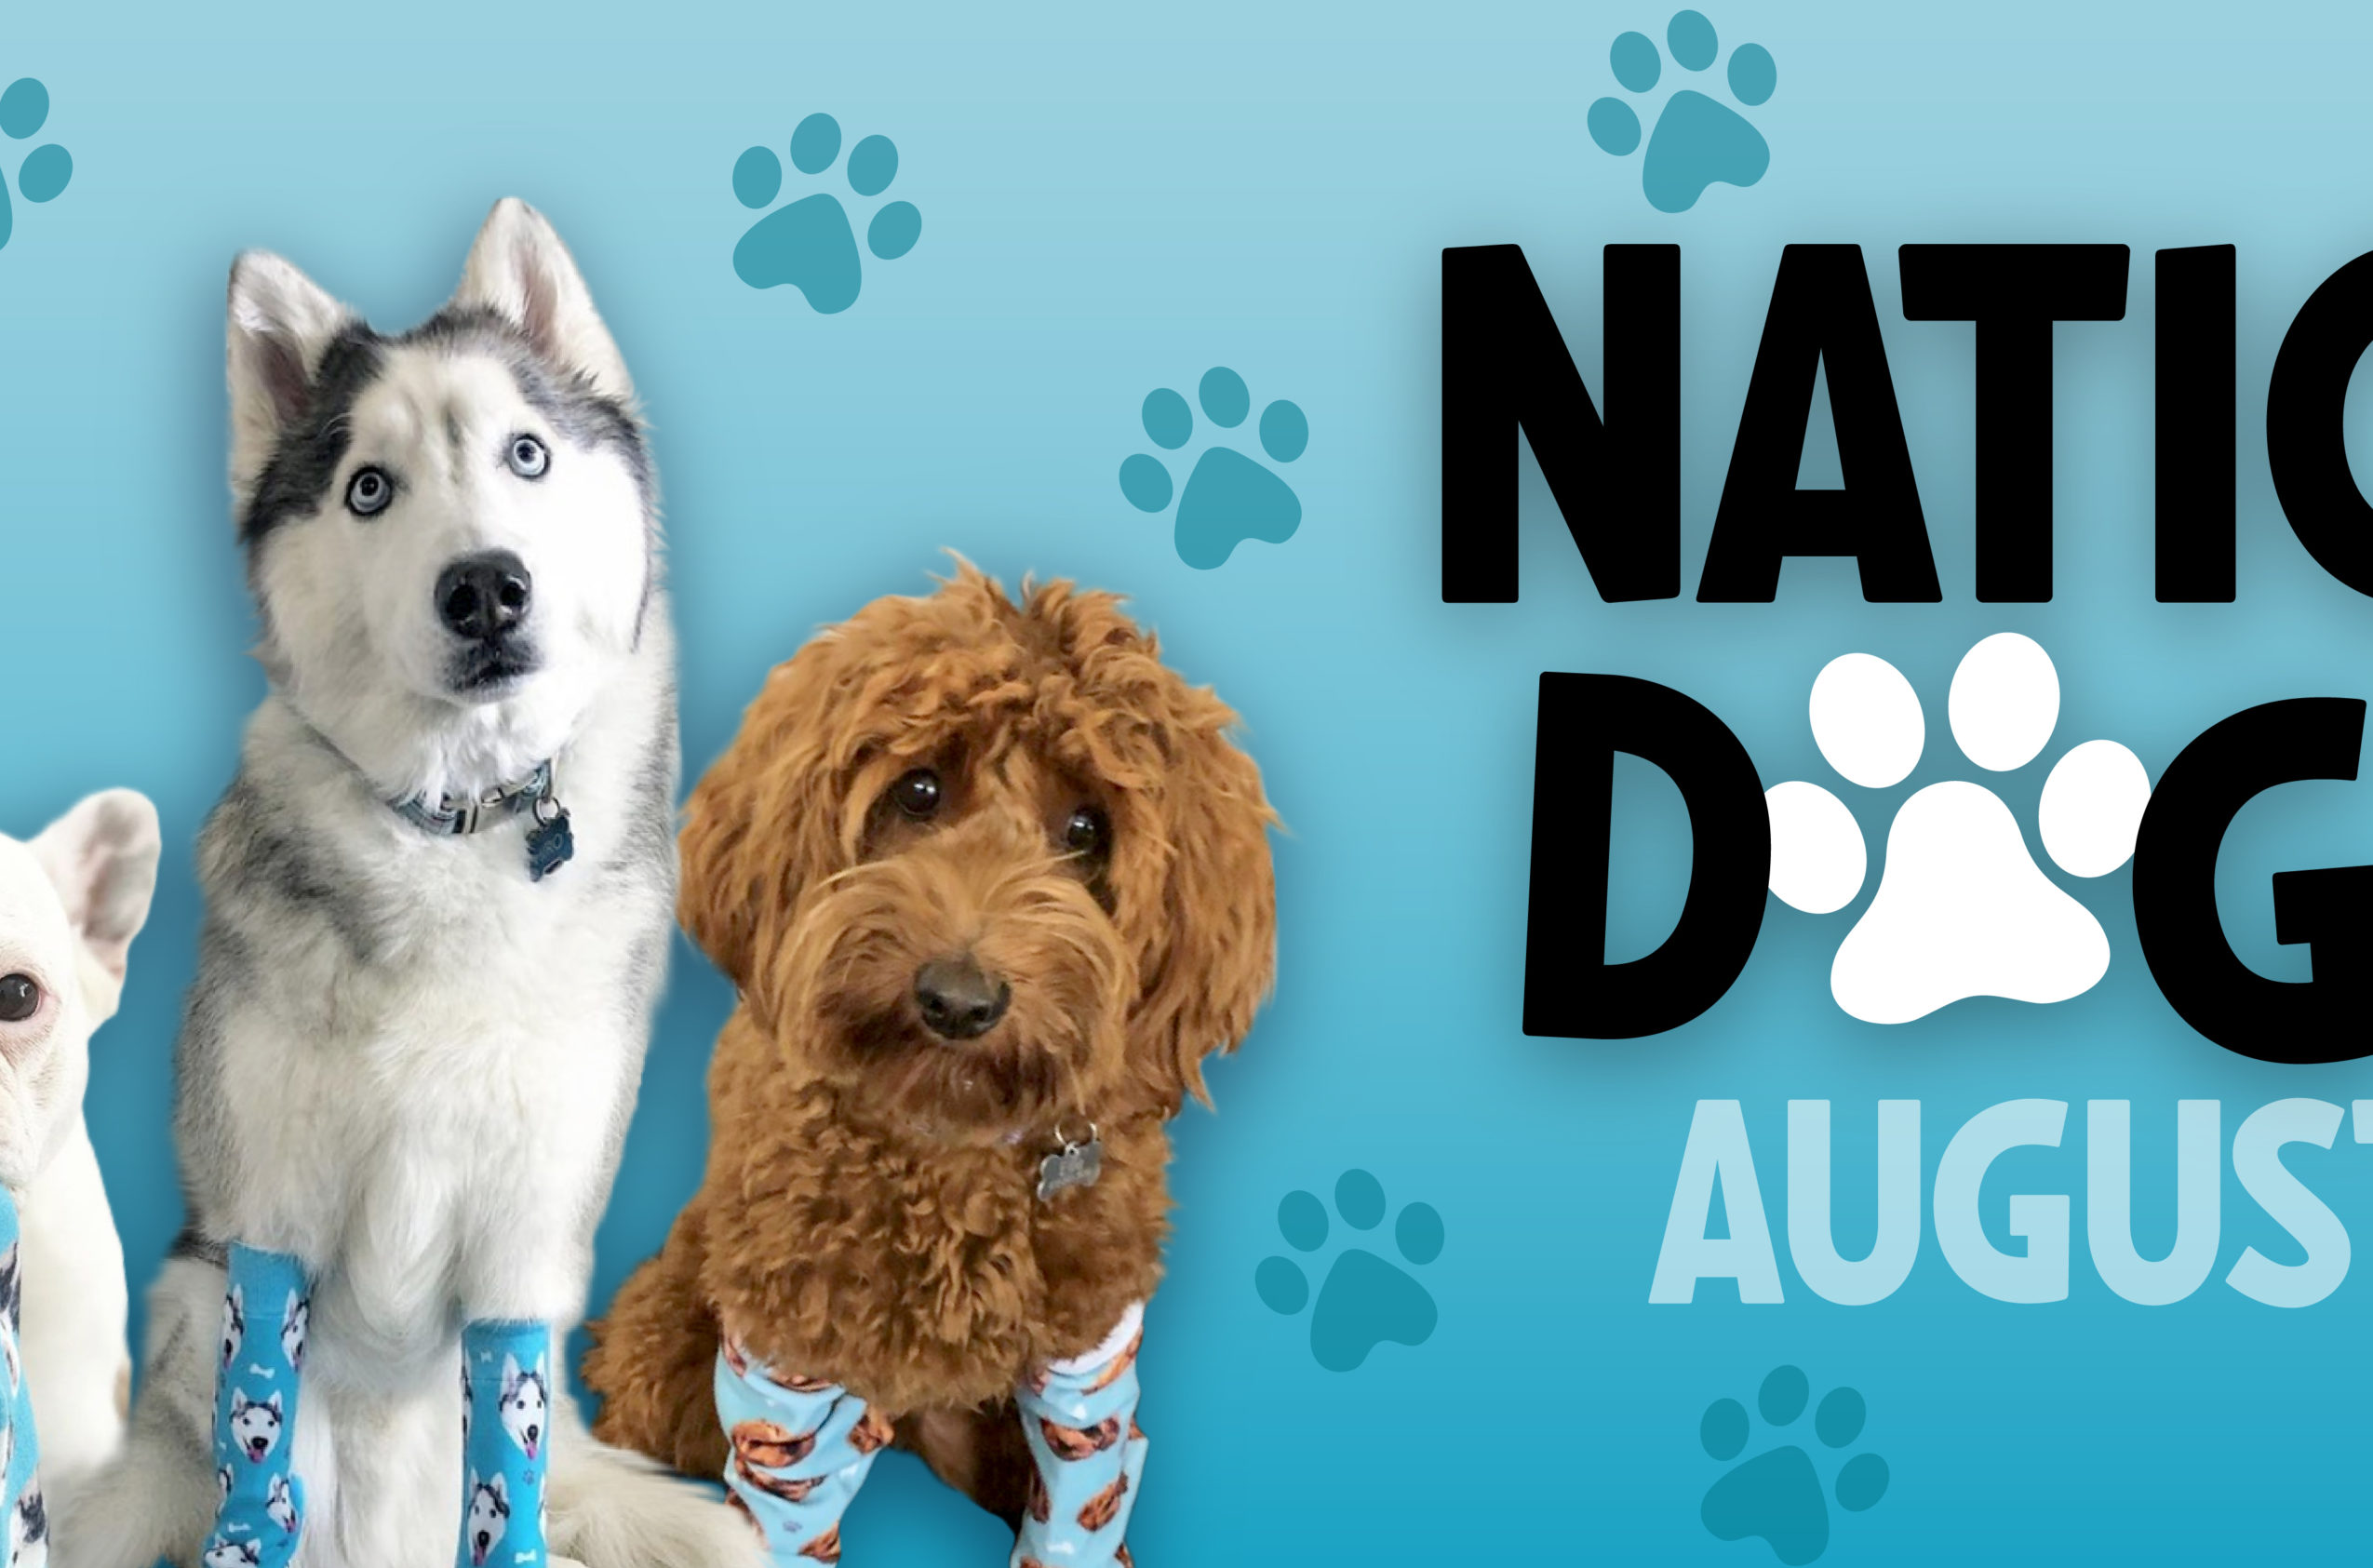 Category: National Dog Day | DivvyUp